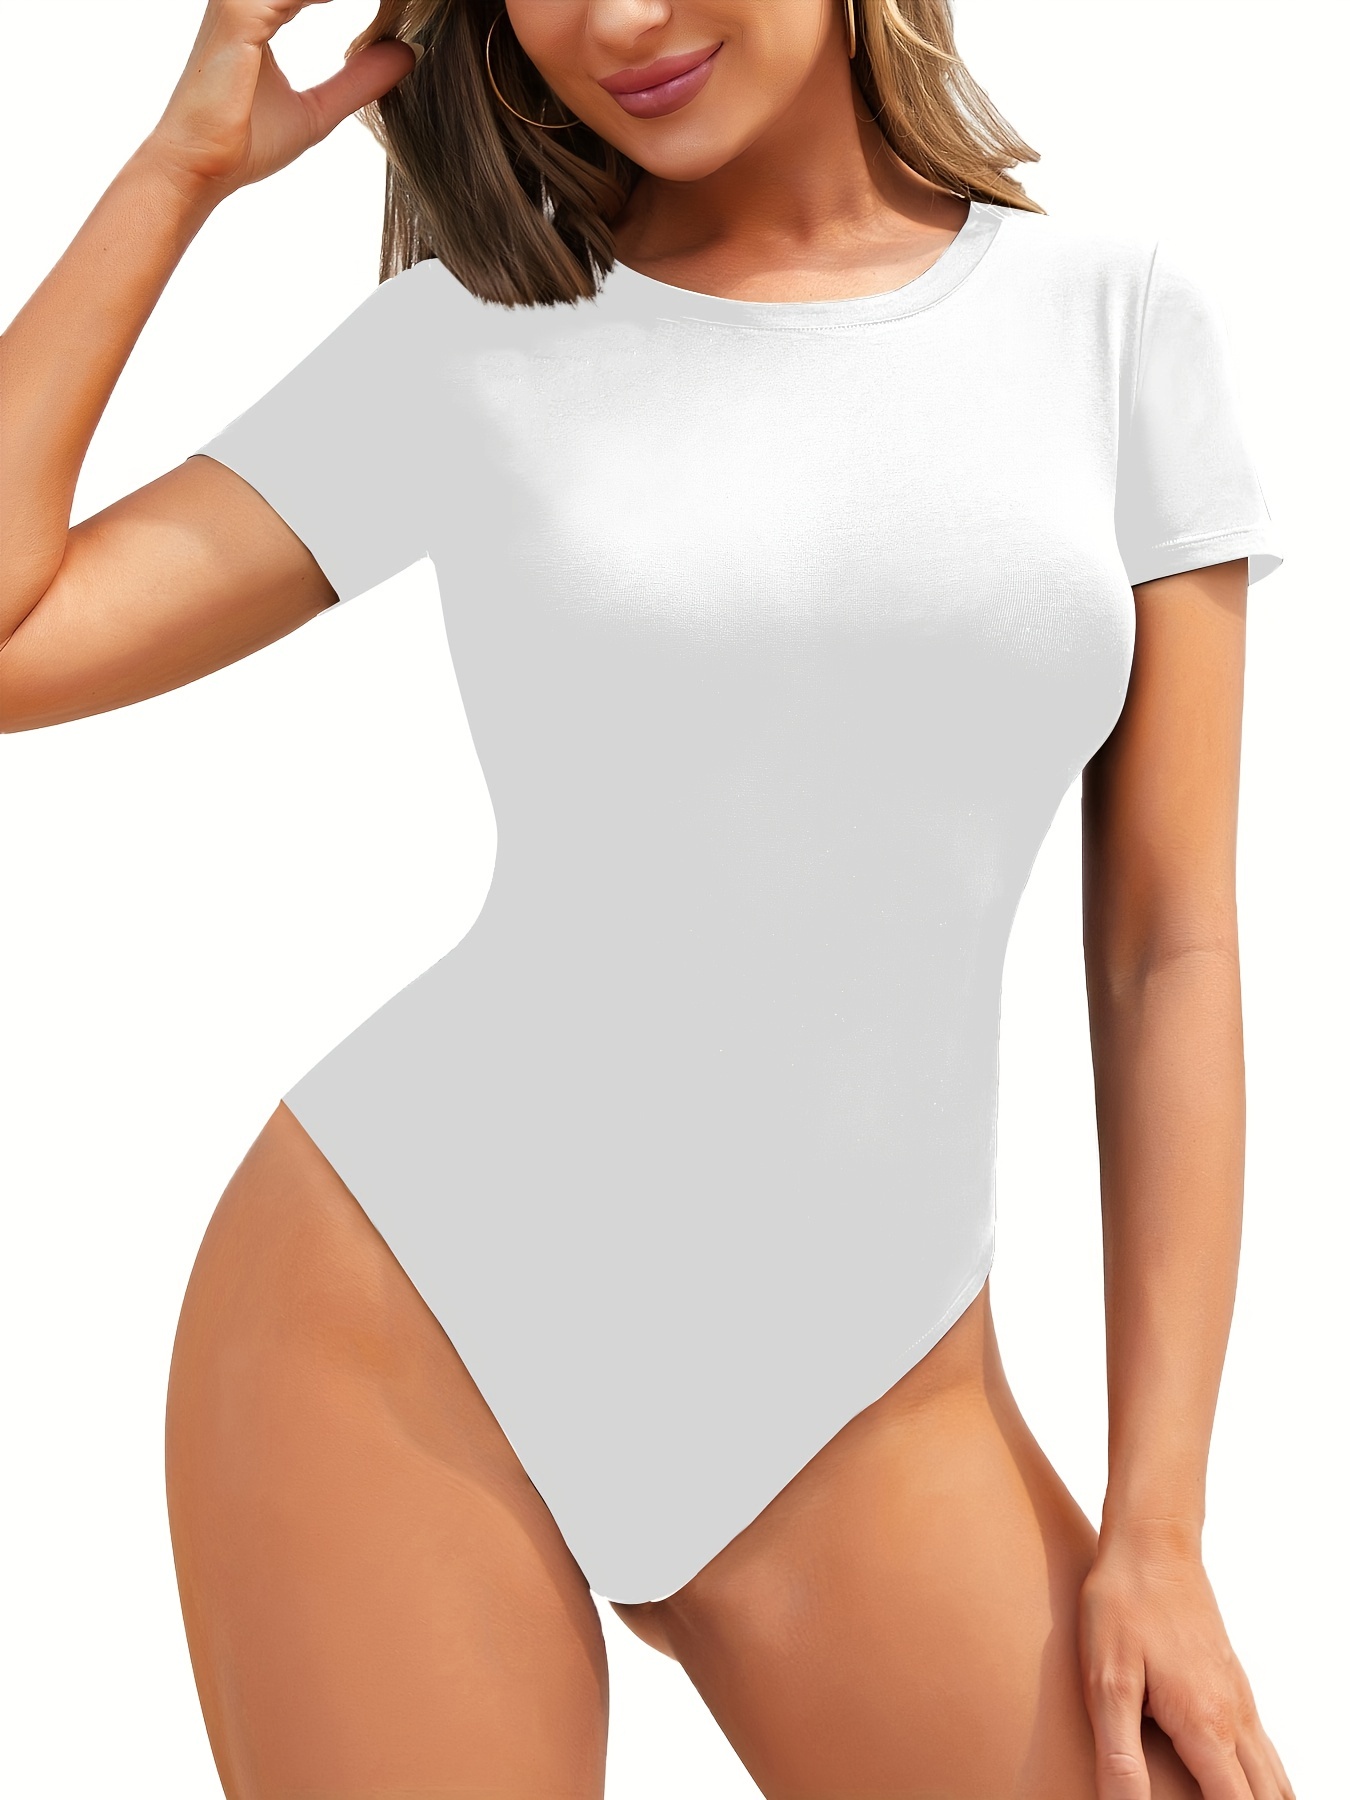  V Neck Bodysuit For Women Thong Tummy Control Short Sleeve Body  Shaper Slimming Body Suits Leotard Tops